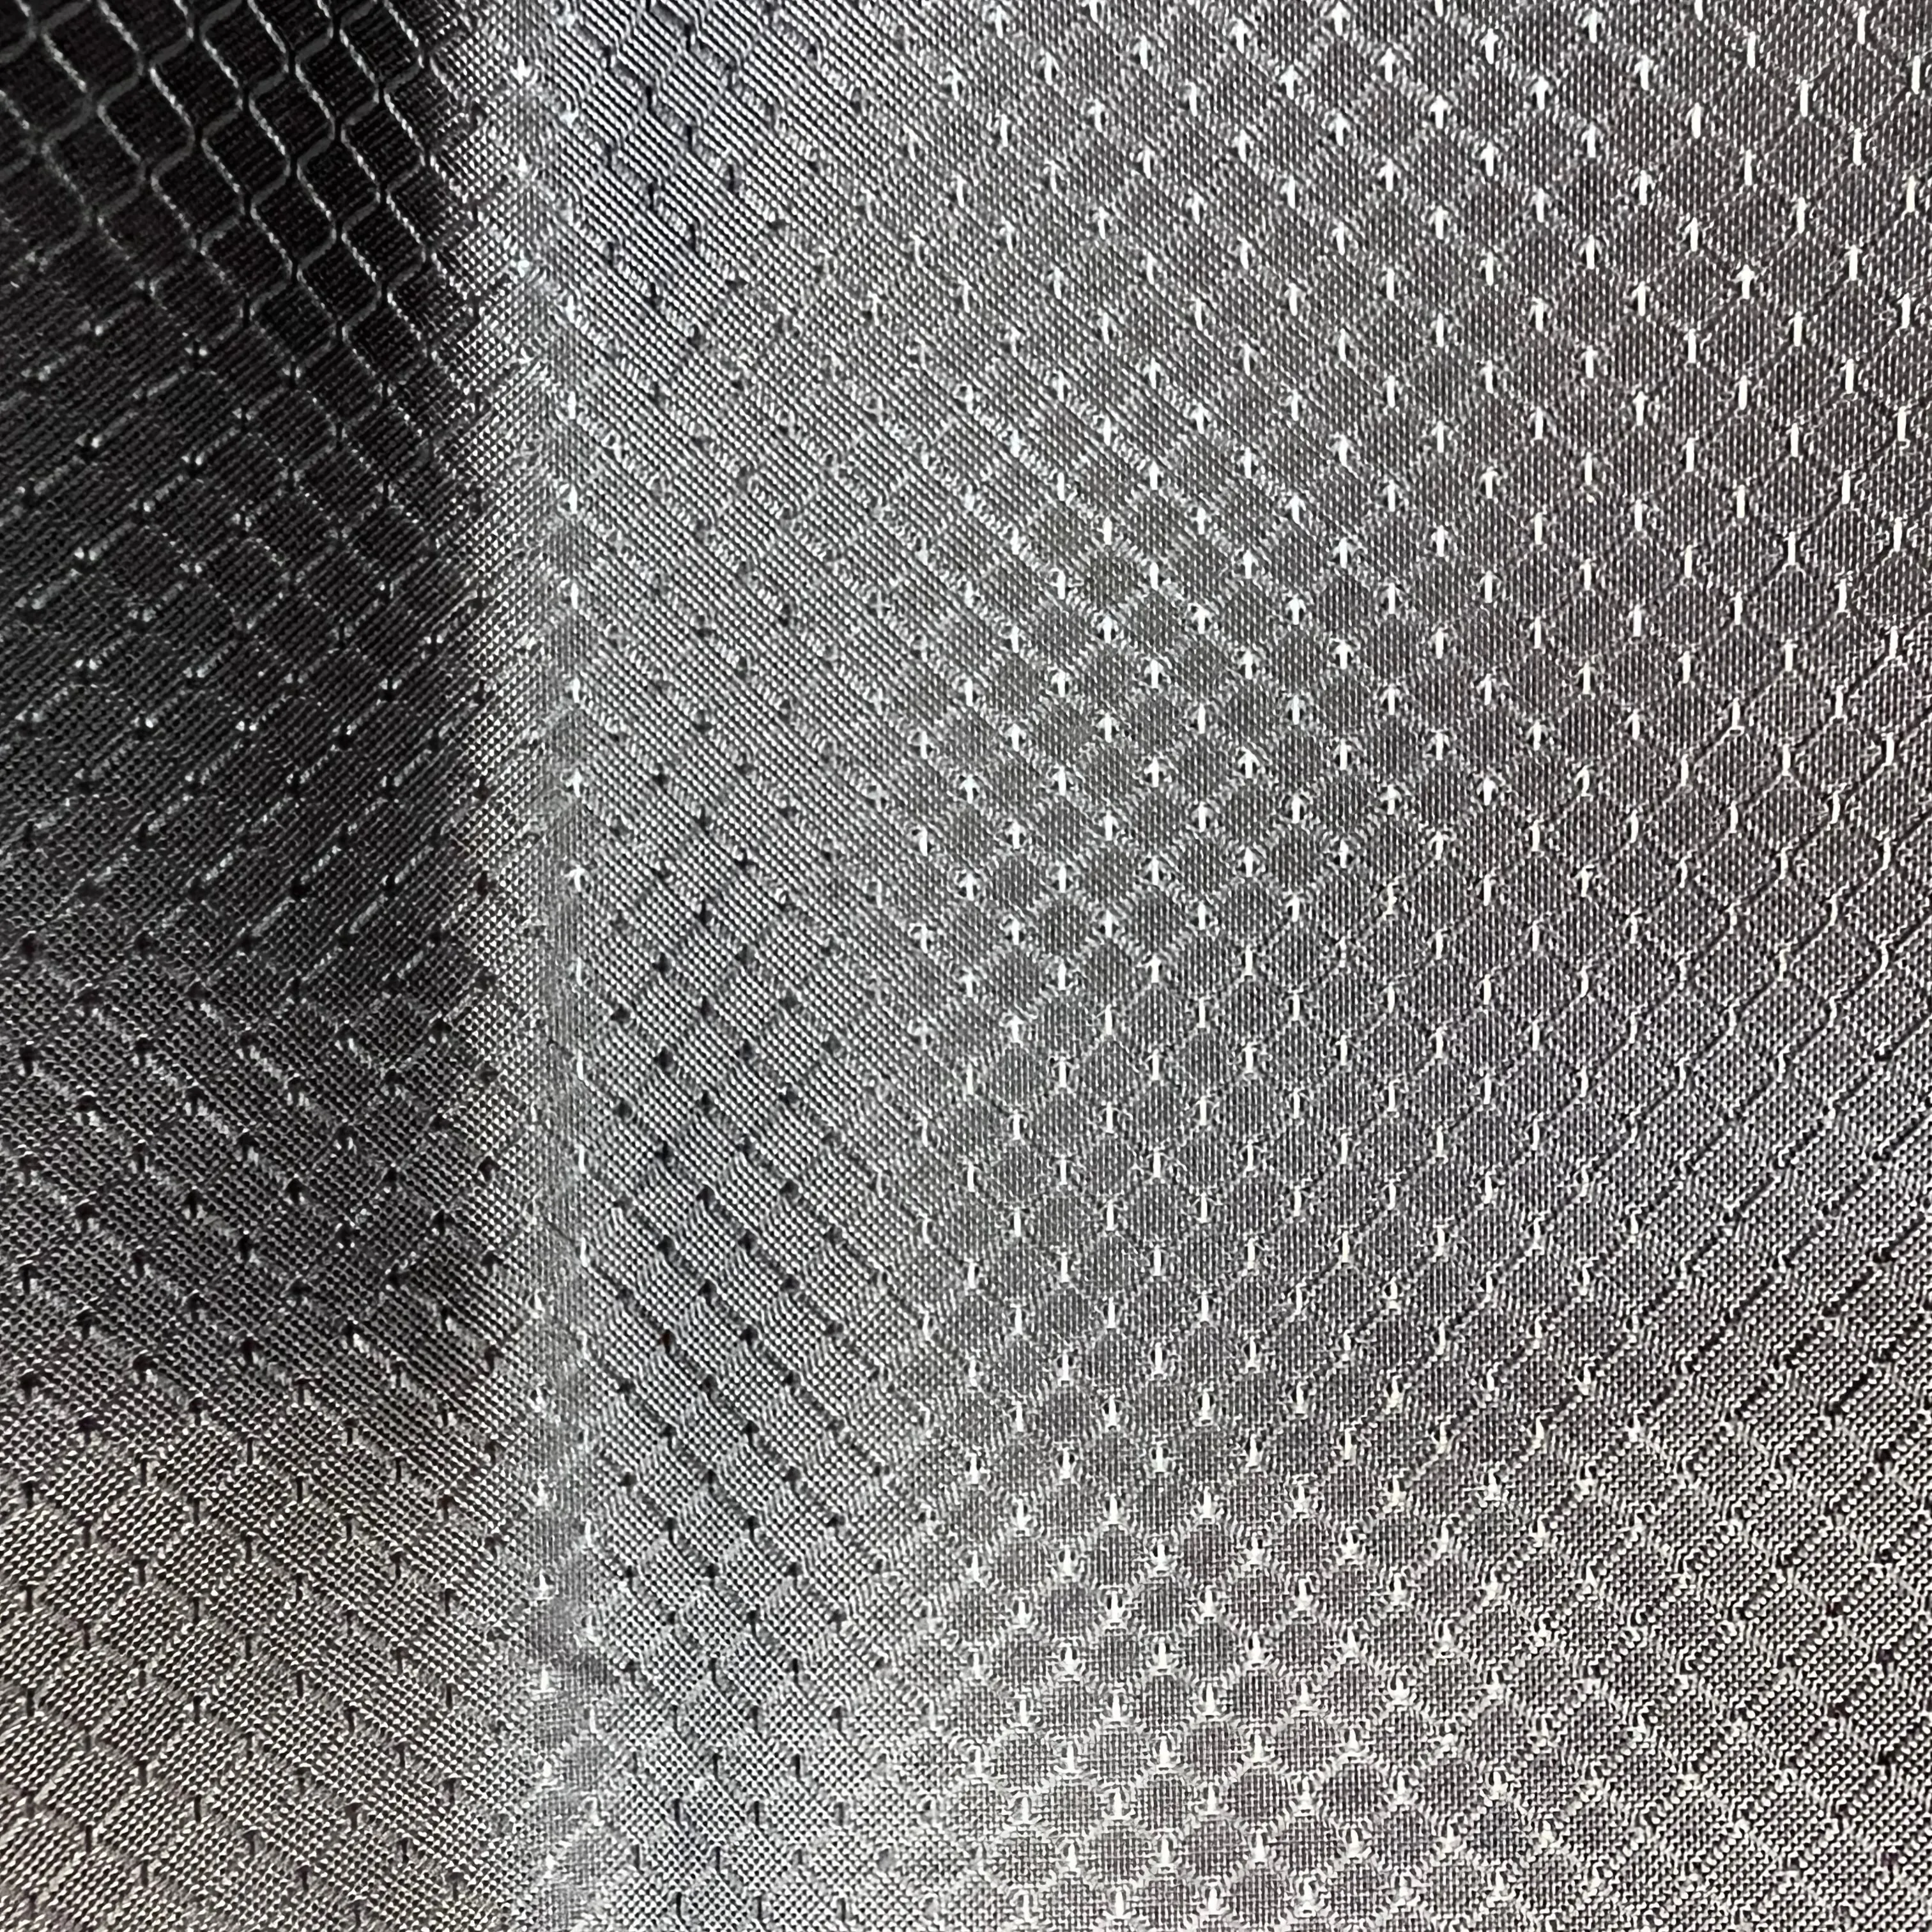 Oxford Fabric 400Dx300D 70% Nylon 30% Polyester Diamond Ripstop Design PU2000 + DWR + Anti-UV UPF 40+ Coatings